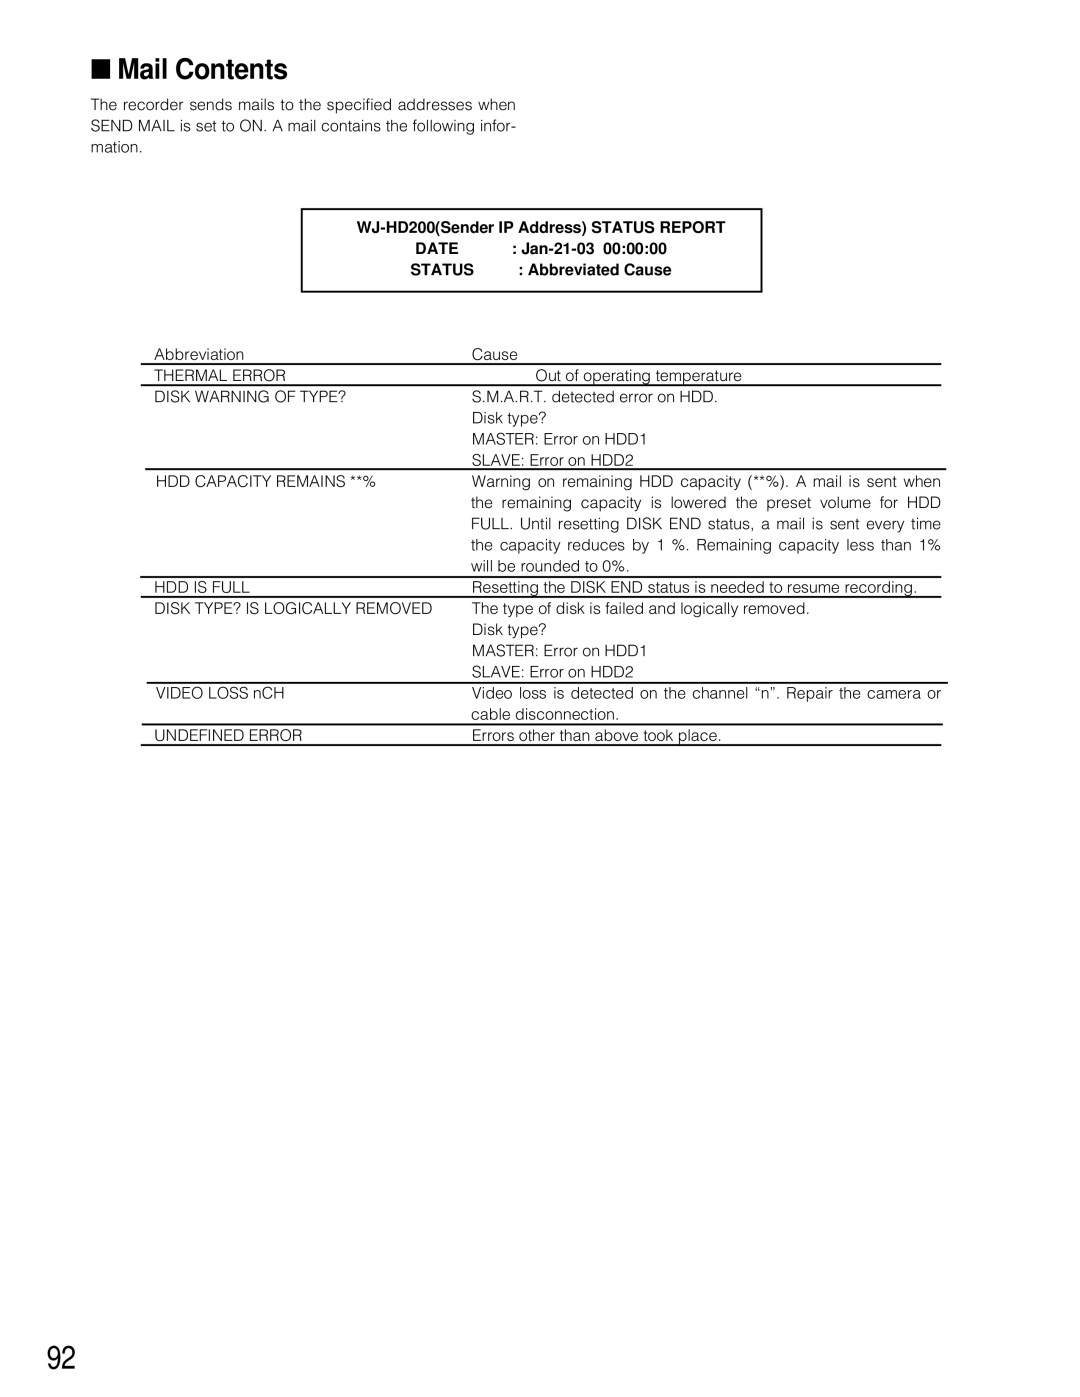 Panasonic manual Mail Contents, WJ-HD200SenderIP Address STATUS REPORT, Date, Jan-21-0300, Status, Abbreviated Cause 